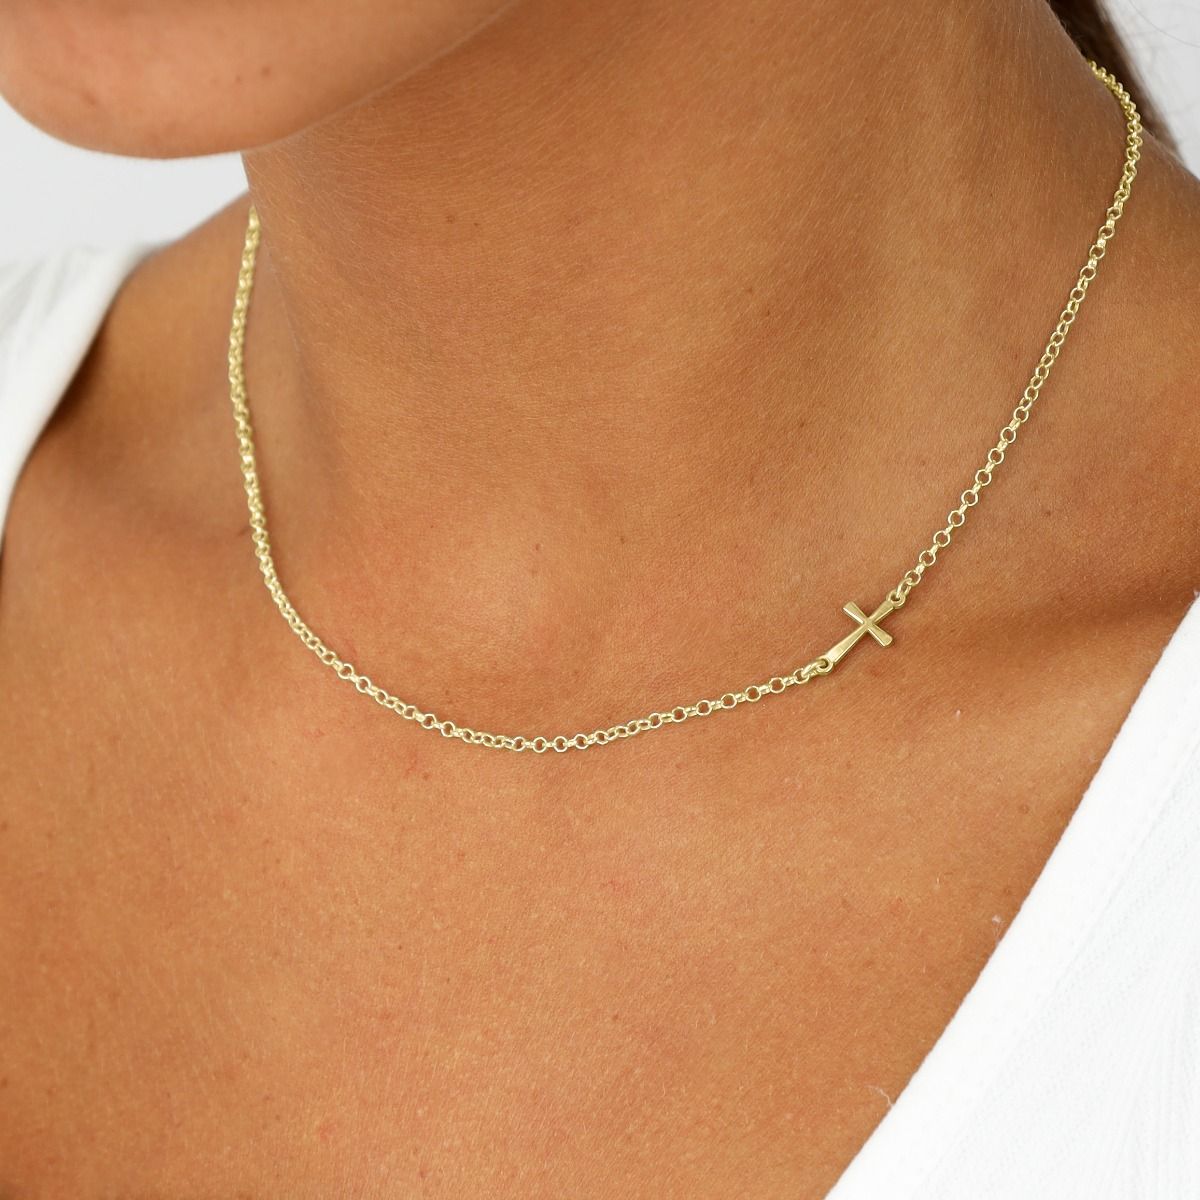 Sideways Cross Necklace by Talisa - Dainty Gold Cross Necklace